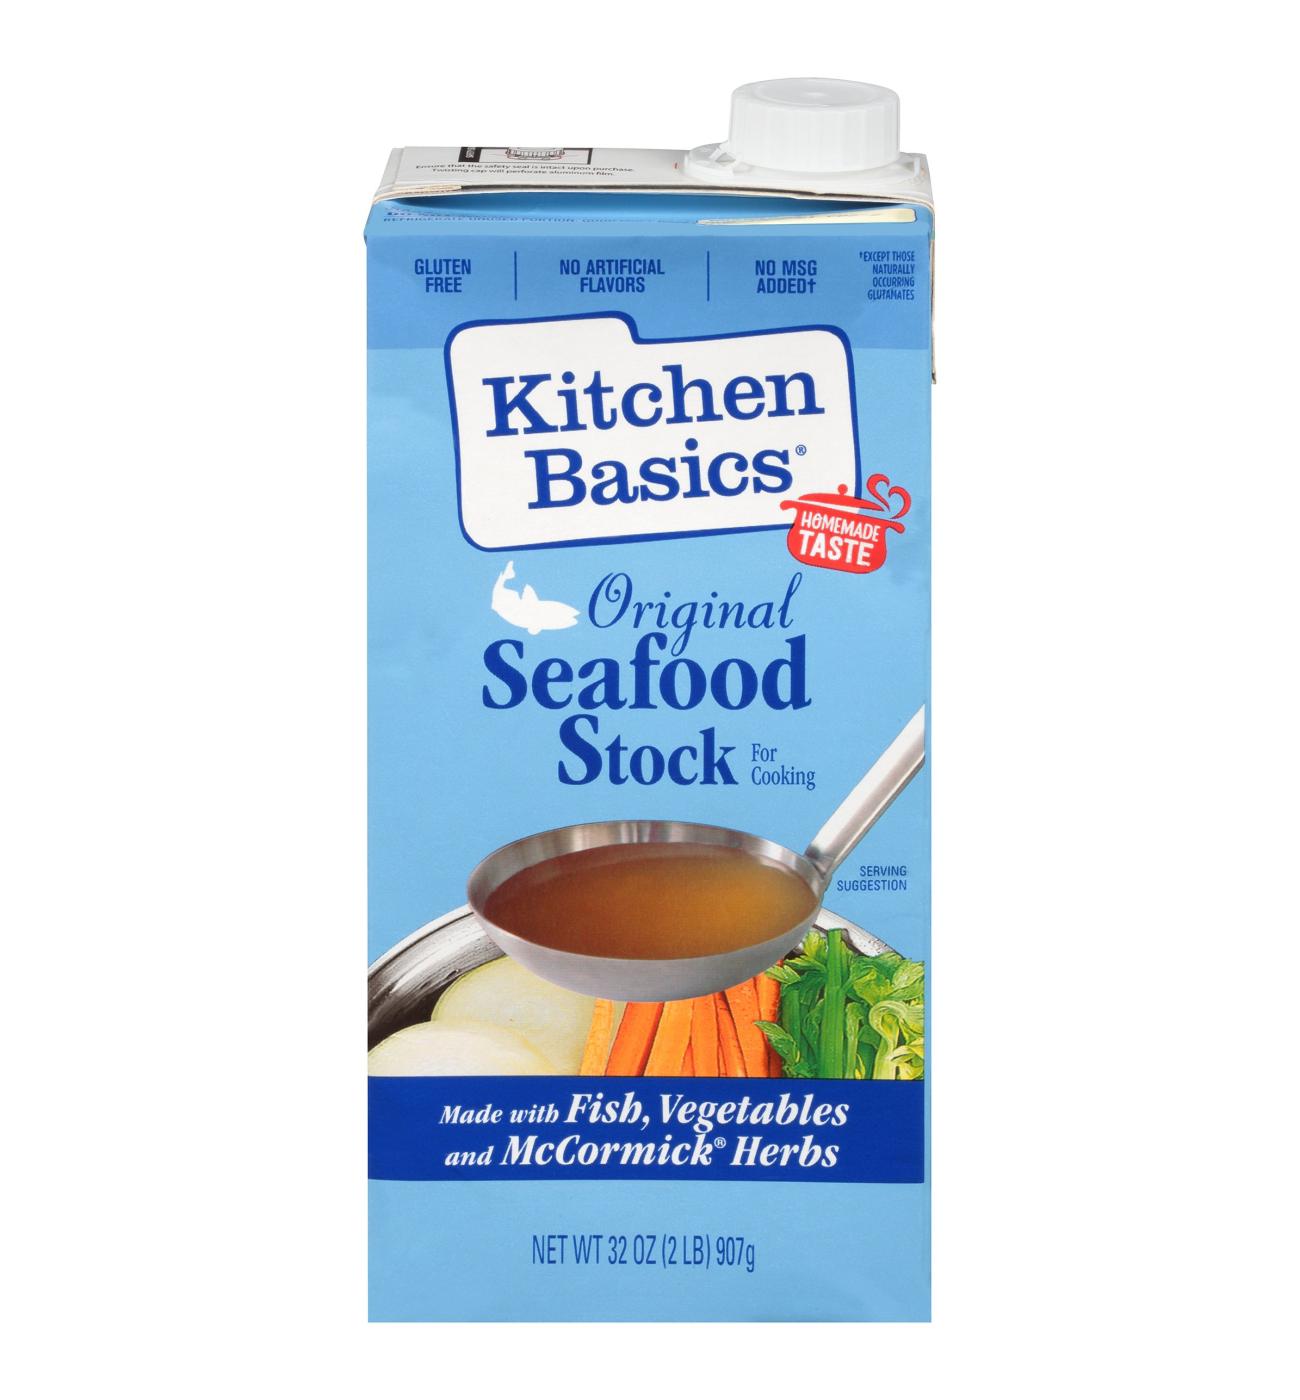 Kitchen Basics Original Seafood Stock; image 1 of 12